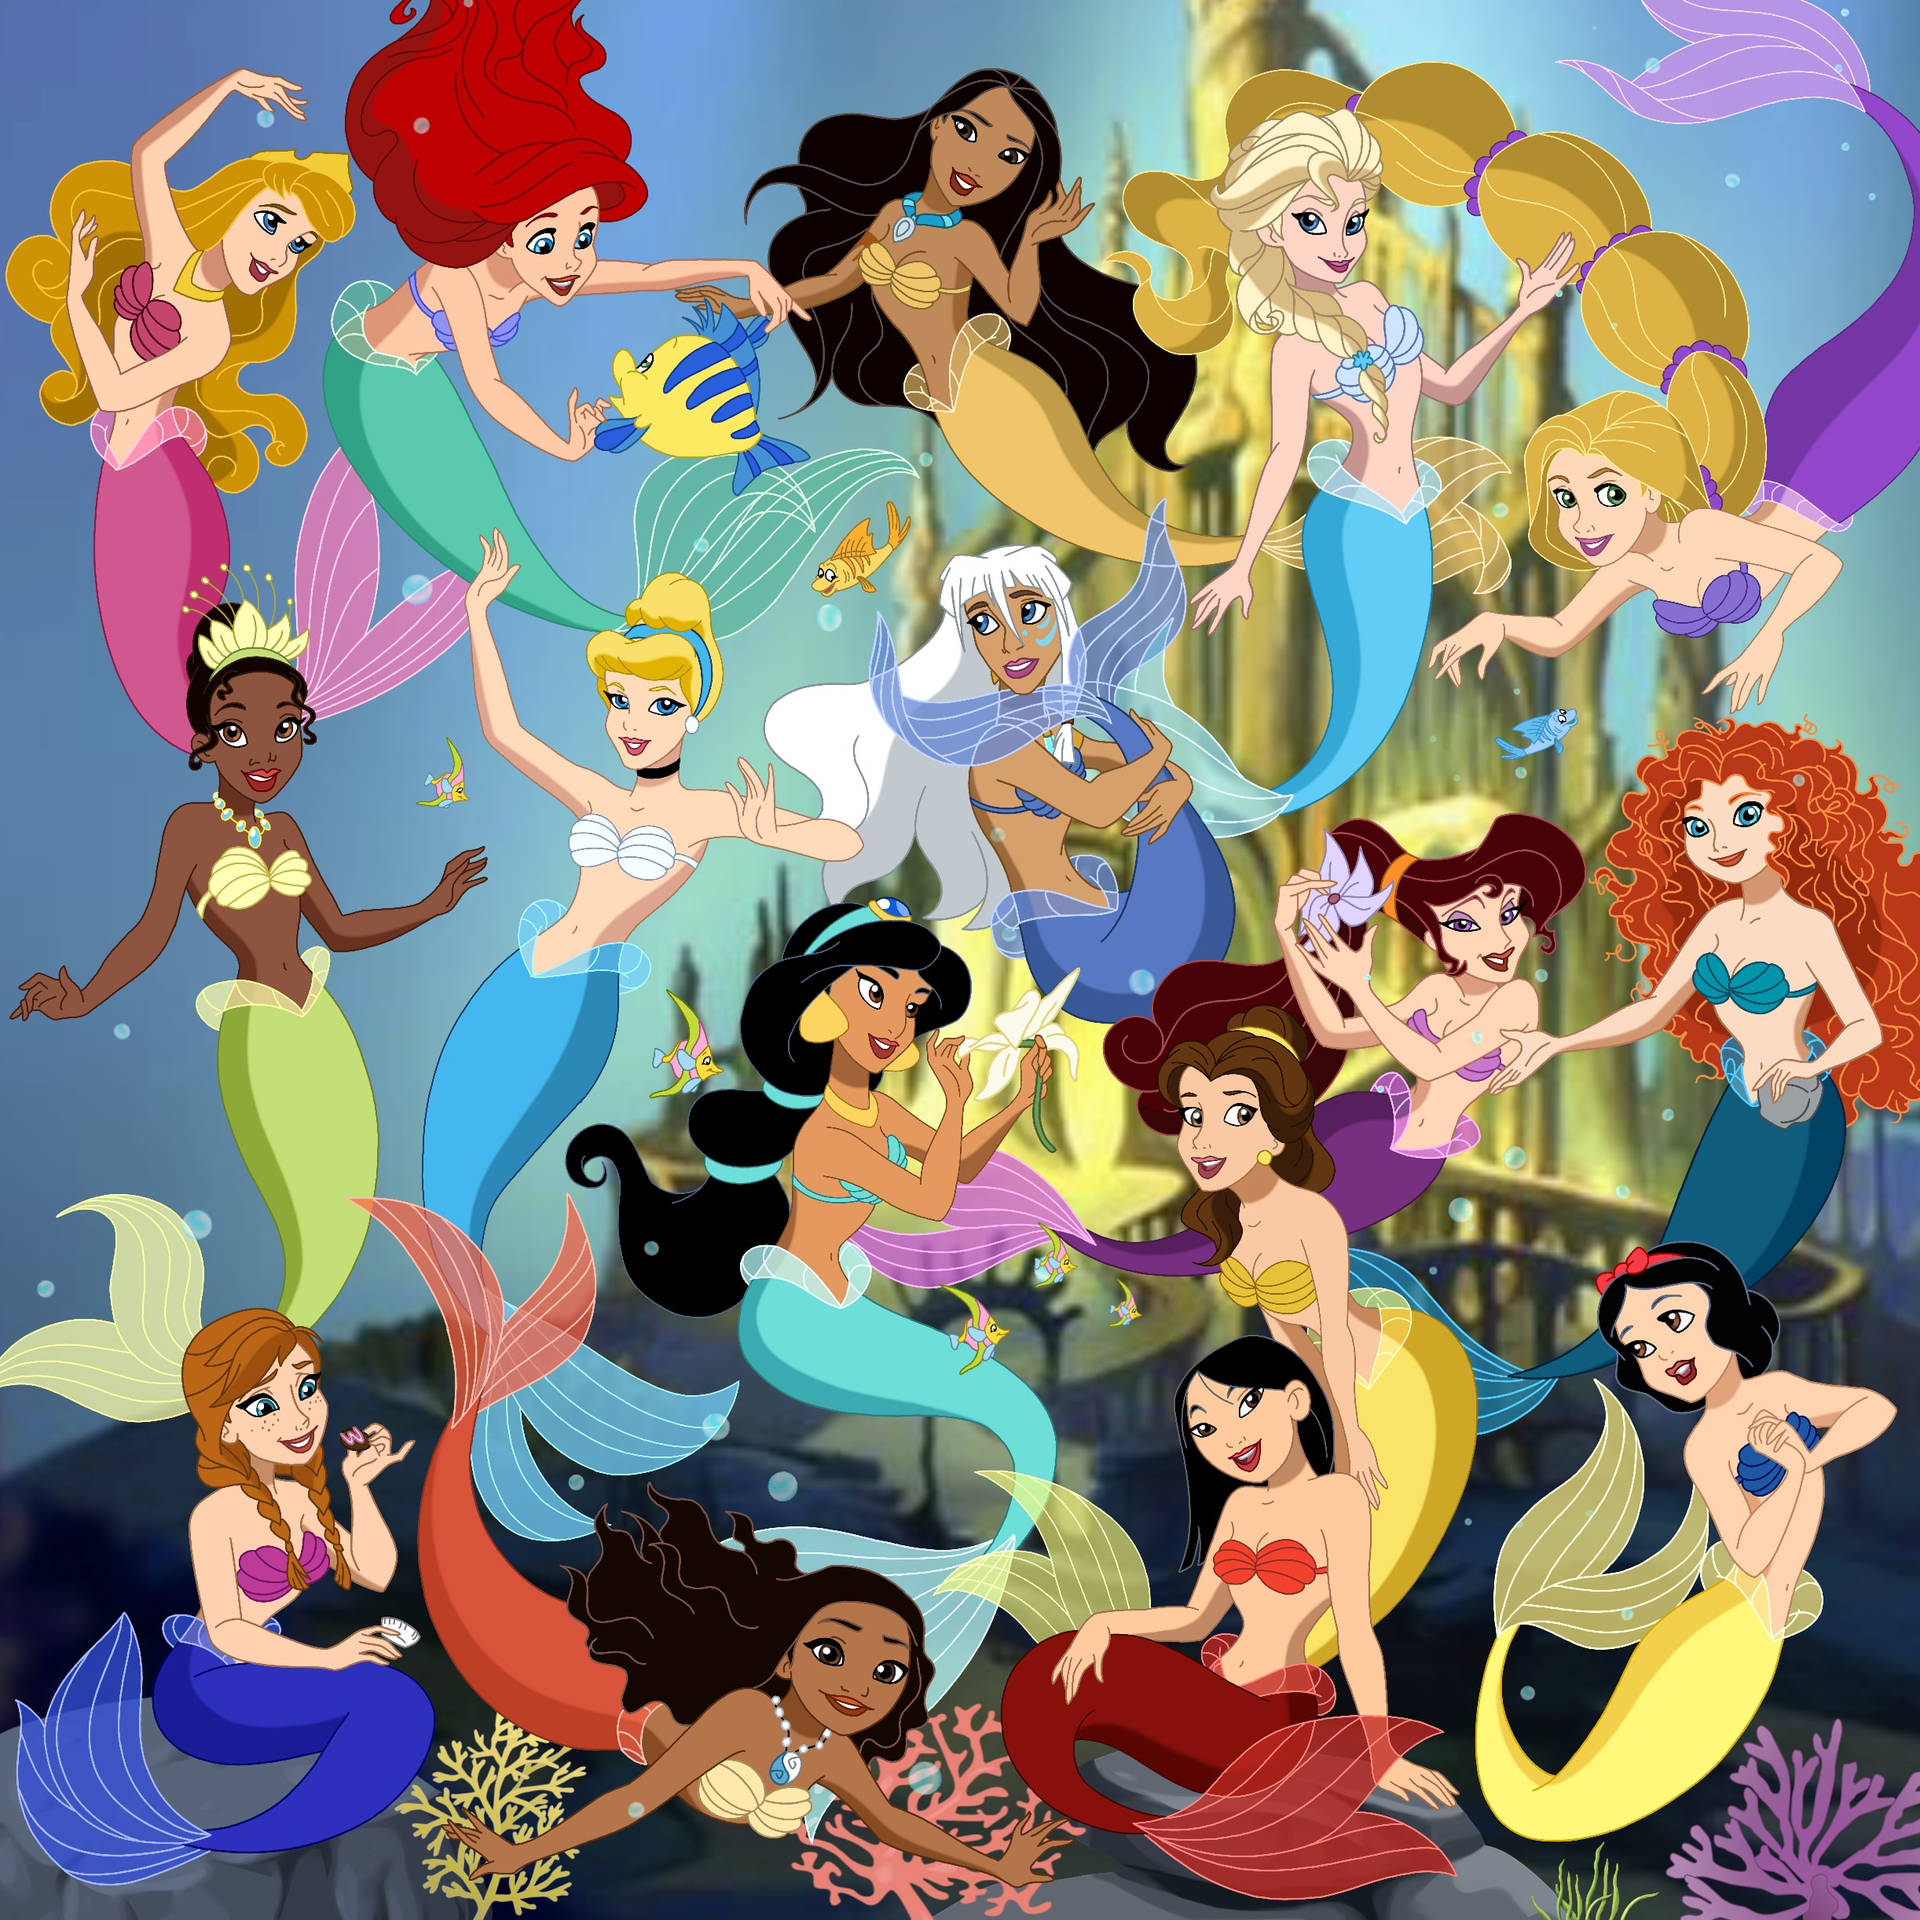 Disney Princess 2444X2444 Wallpaper and Background Image